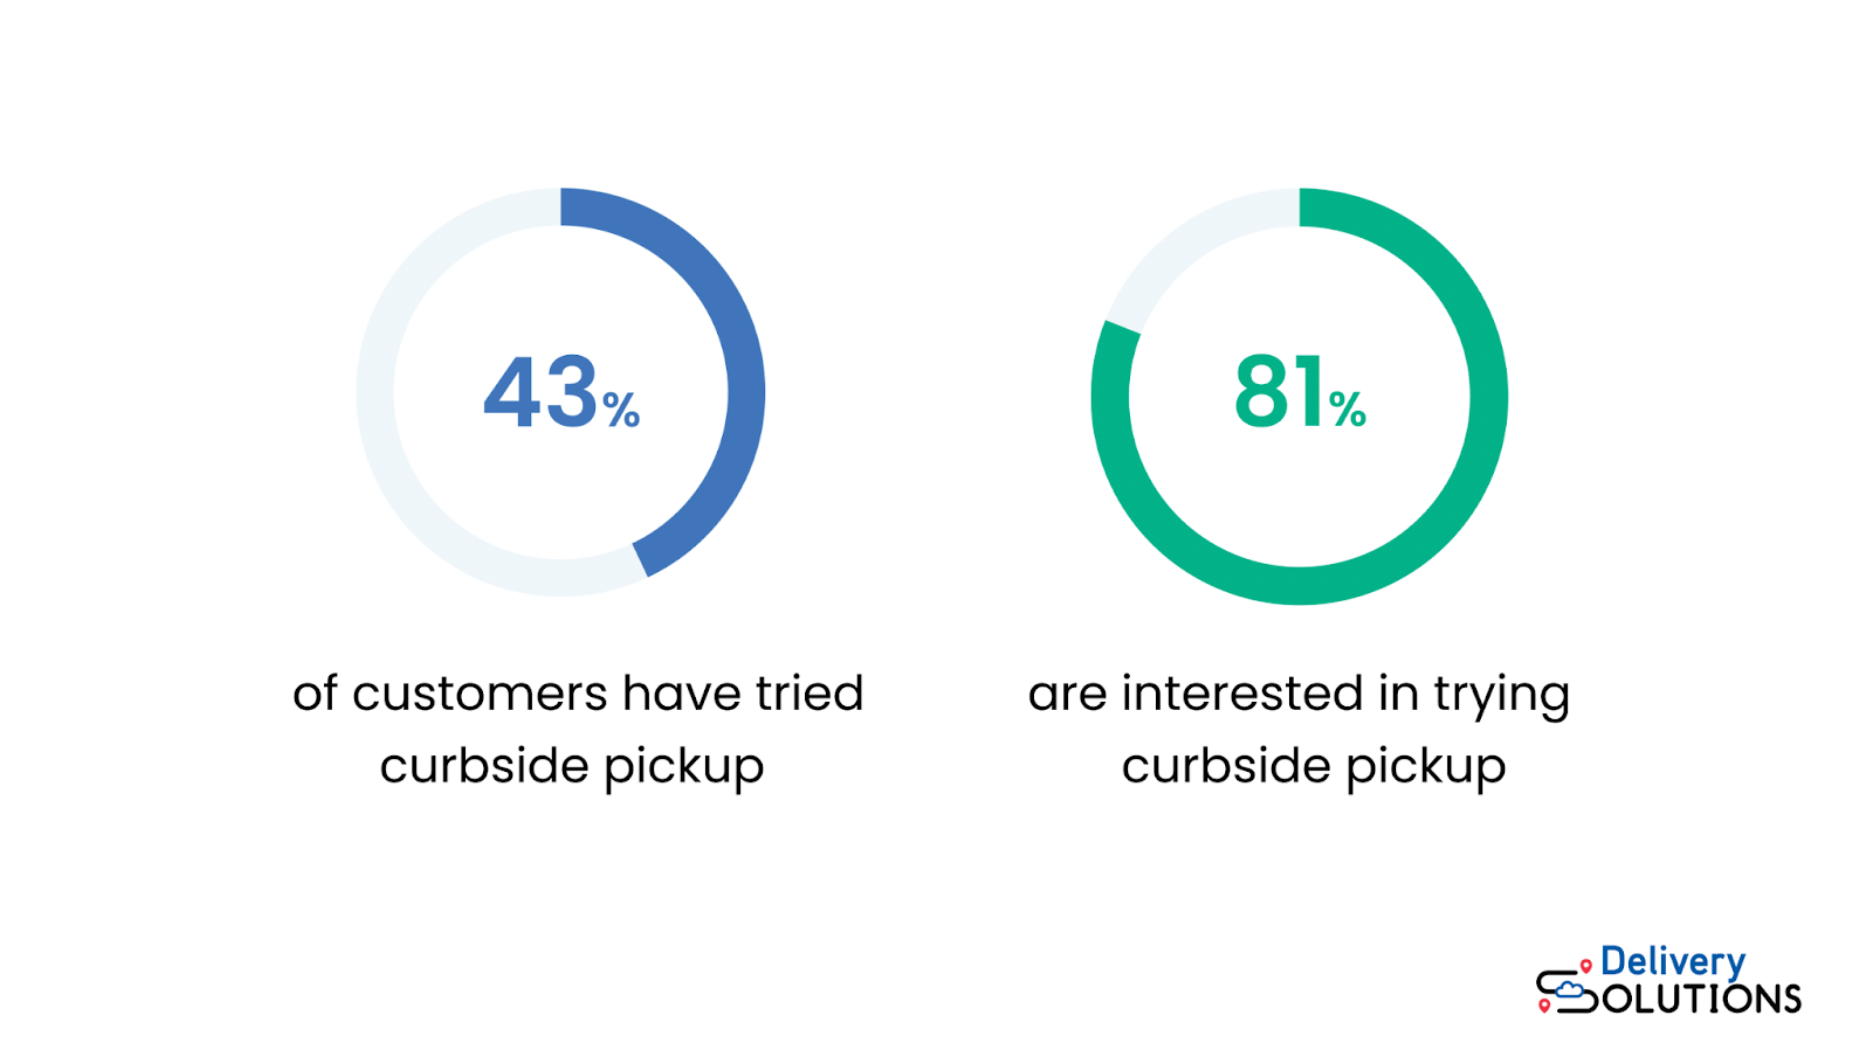 Curbside pickup consumer use statistics